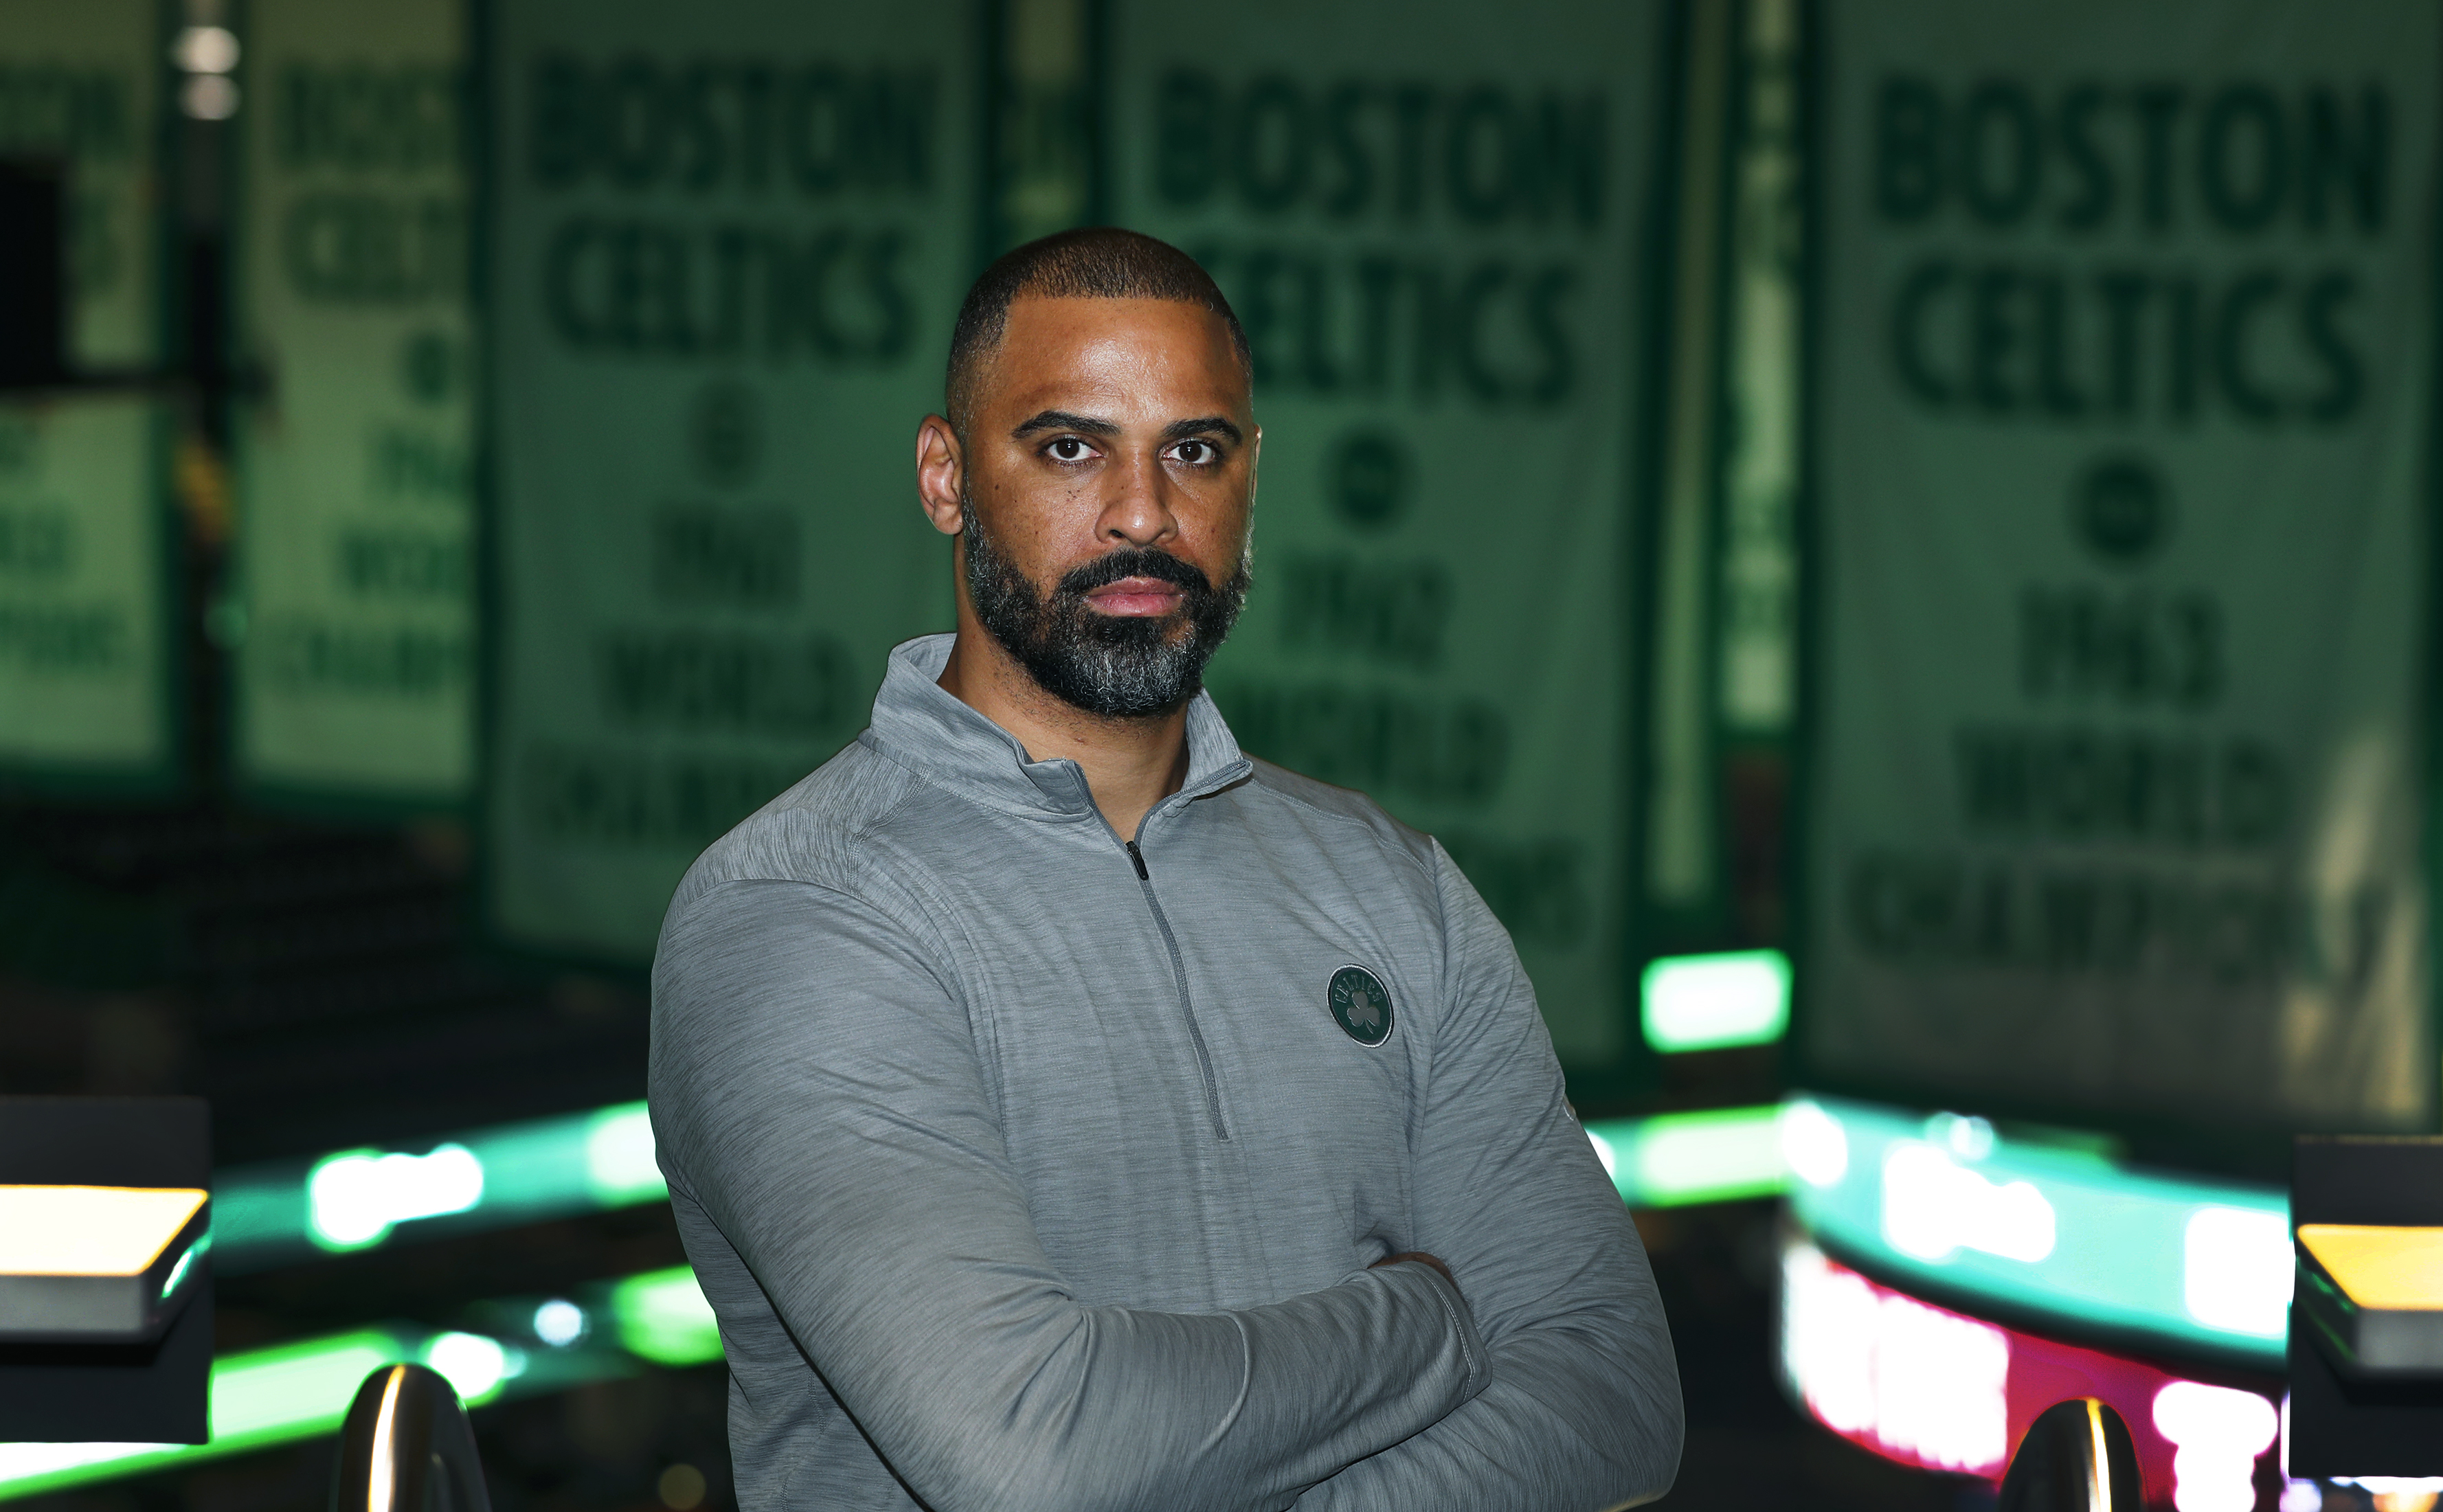 Ime Udoka Faces Discipline from Celtics for Office Relationship - Blazer's  Edge